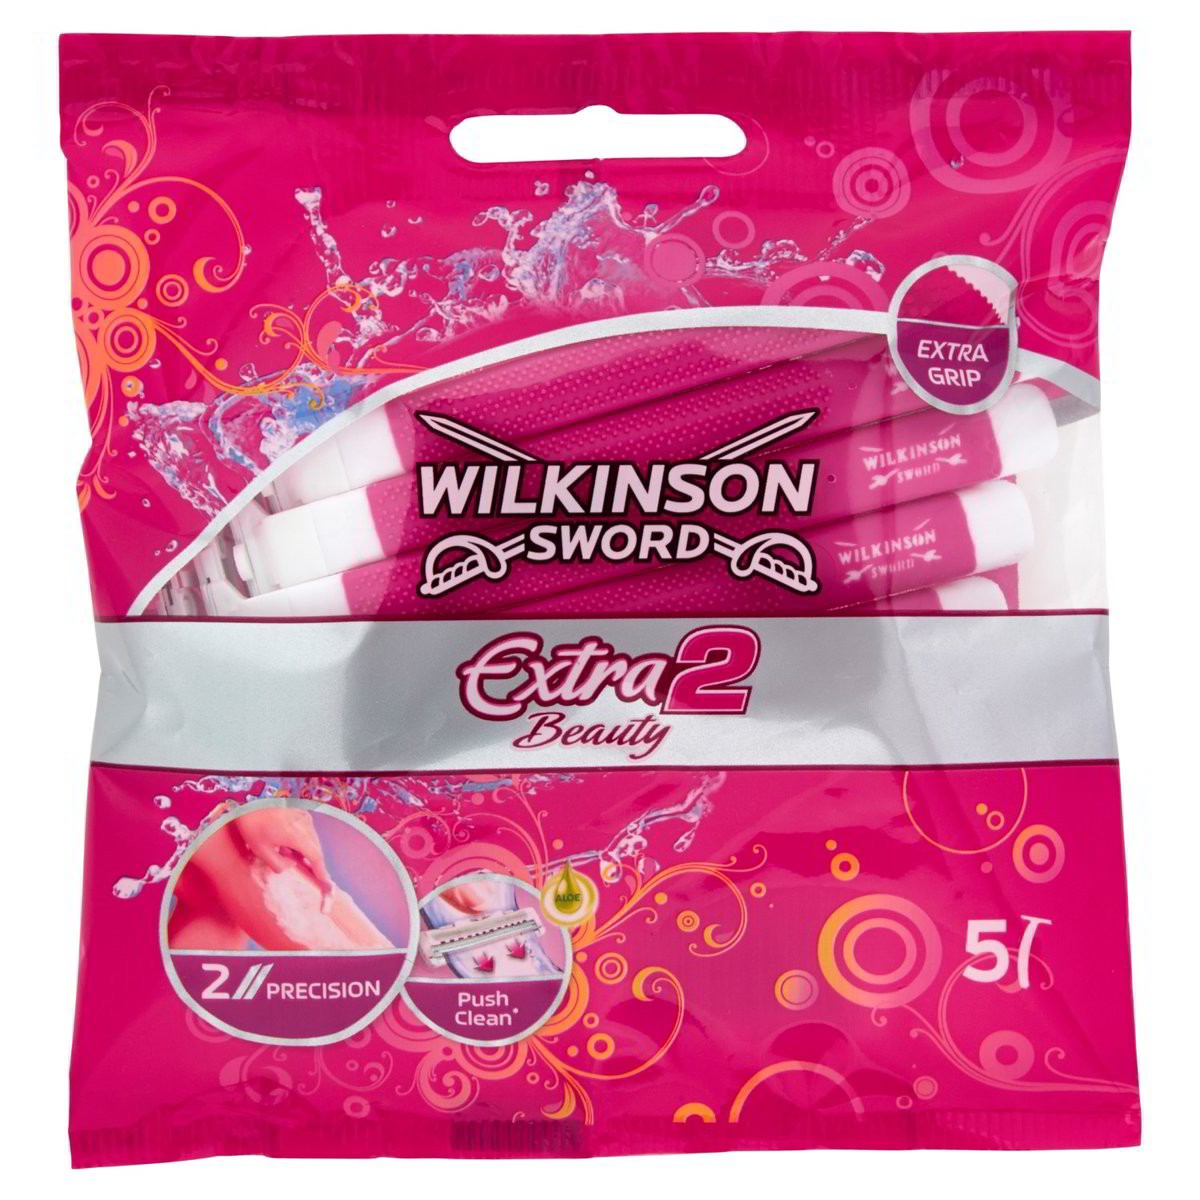 Wilkinson Rasoio Extra 2 Beauty